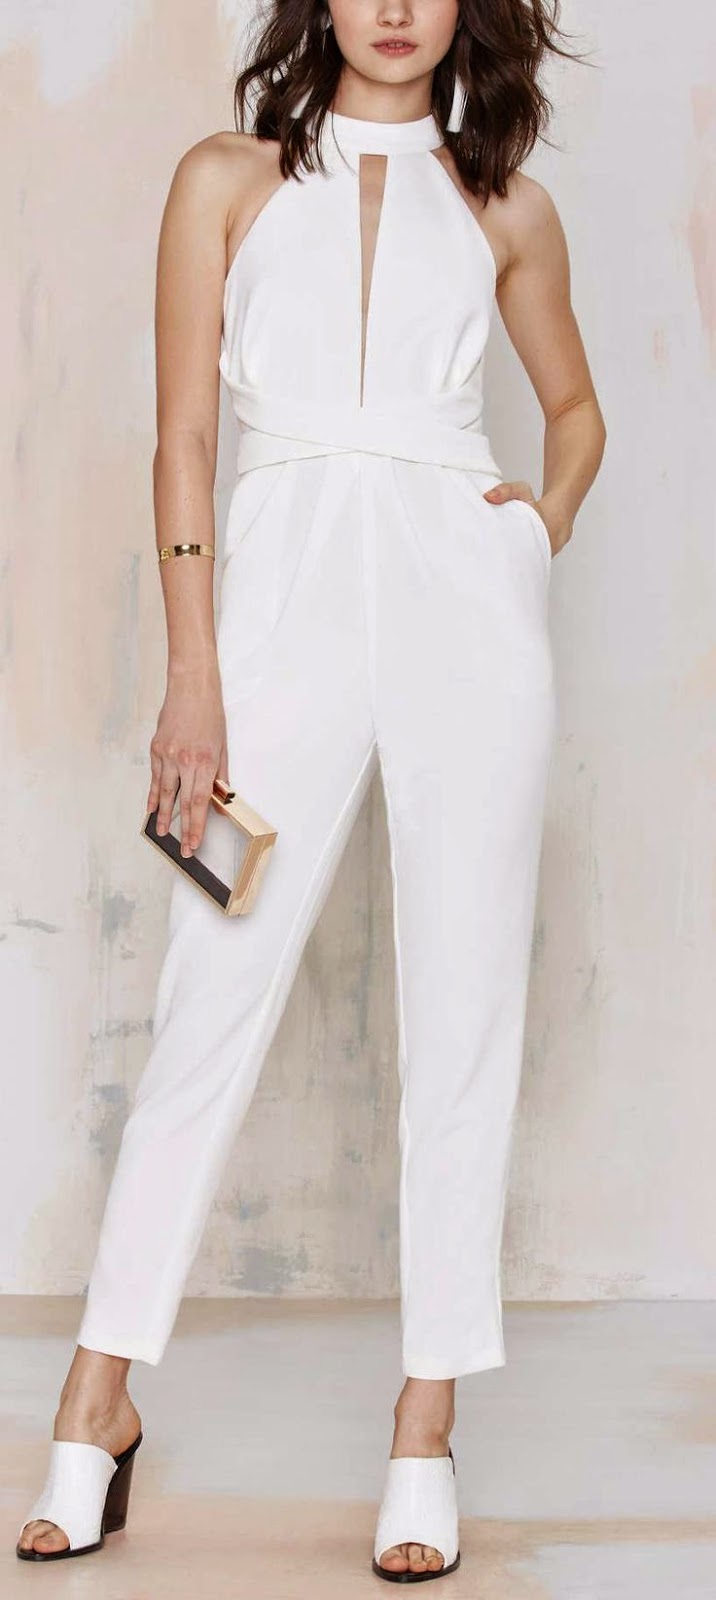 Women' s fashion | Elegant white cut out jumpsuit | Just a Pretty Style